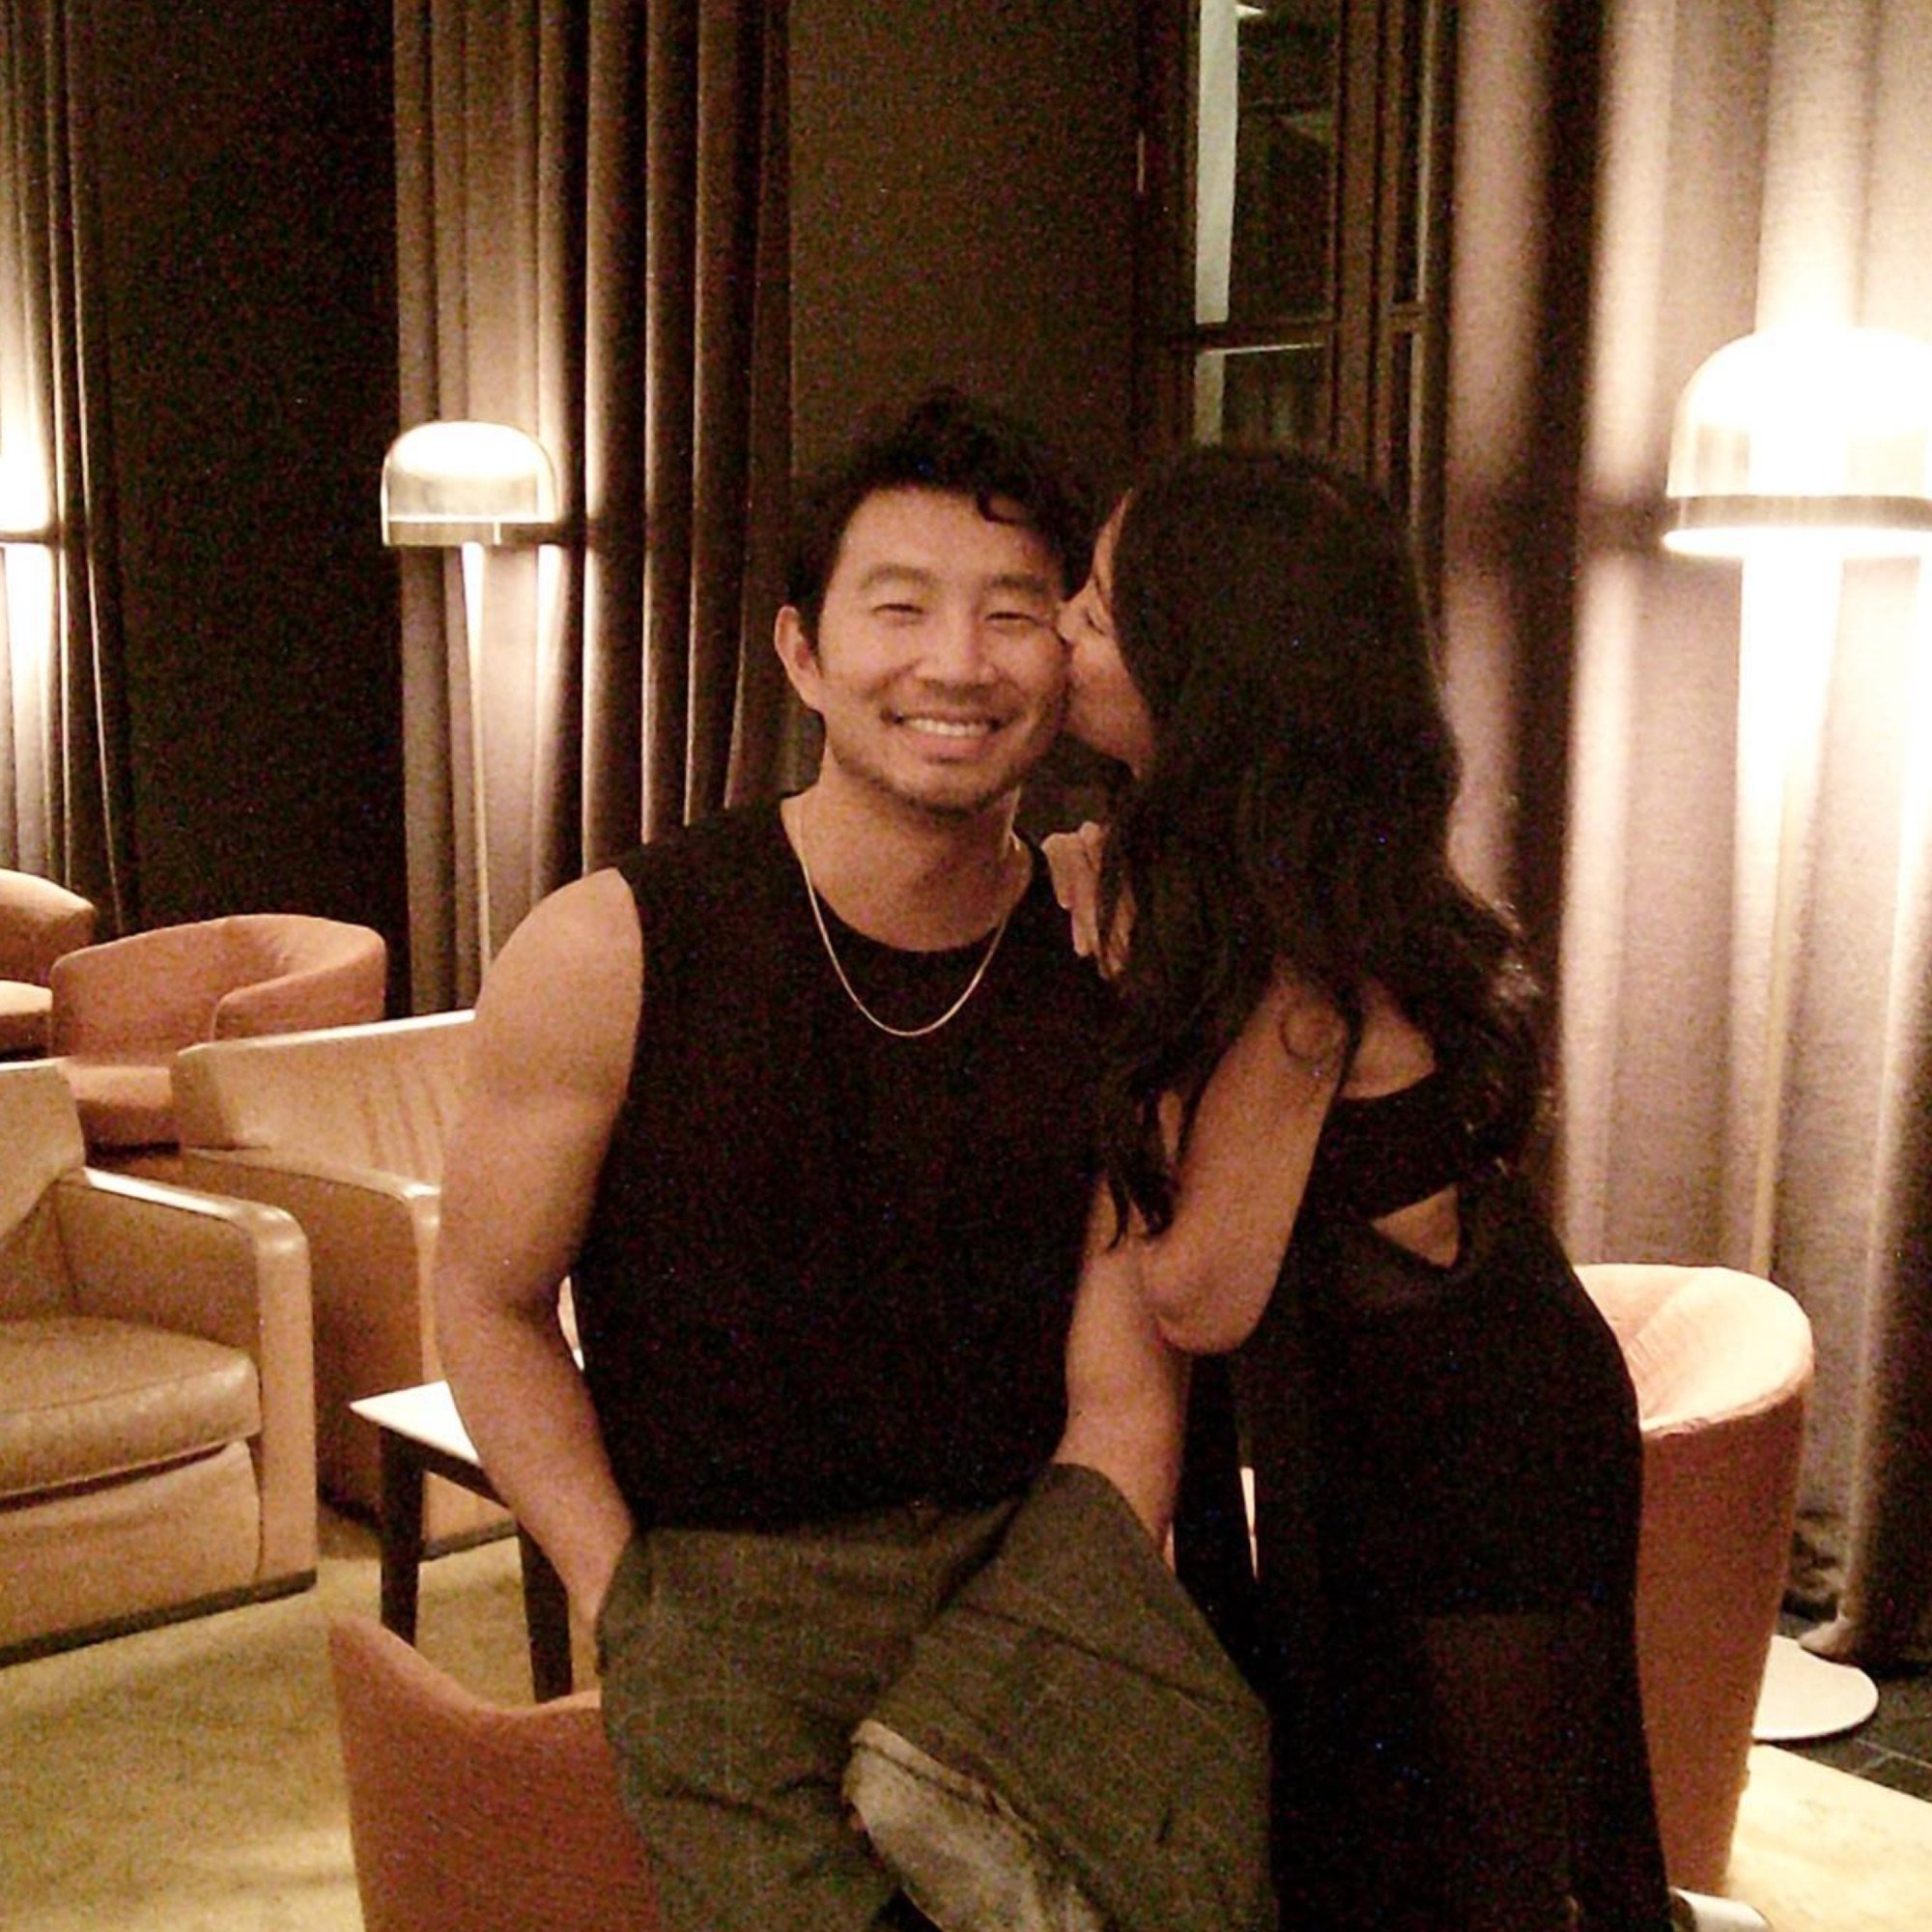 Simu Liu Goes Instagram Official with Girlfriend Allison Hsu